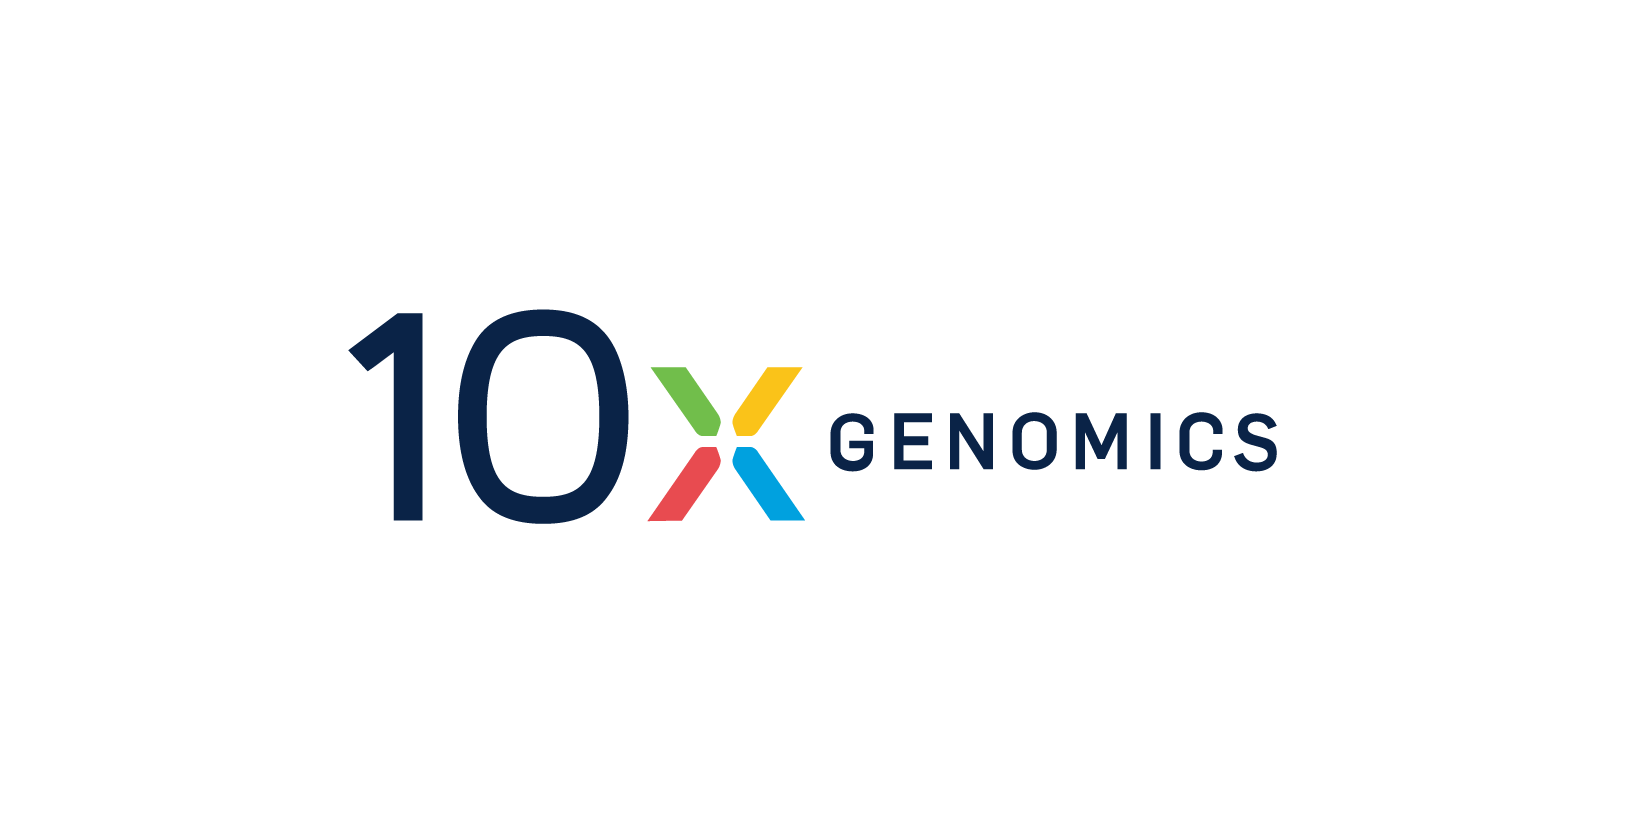 svf_portfolio-company-10xgenomics.png